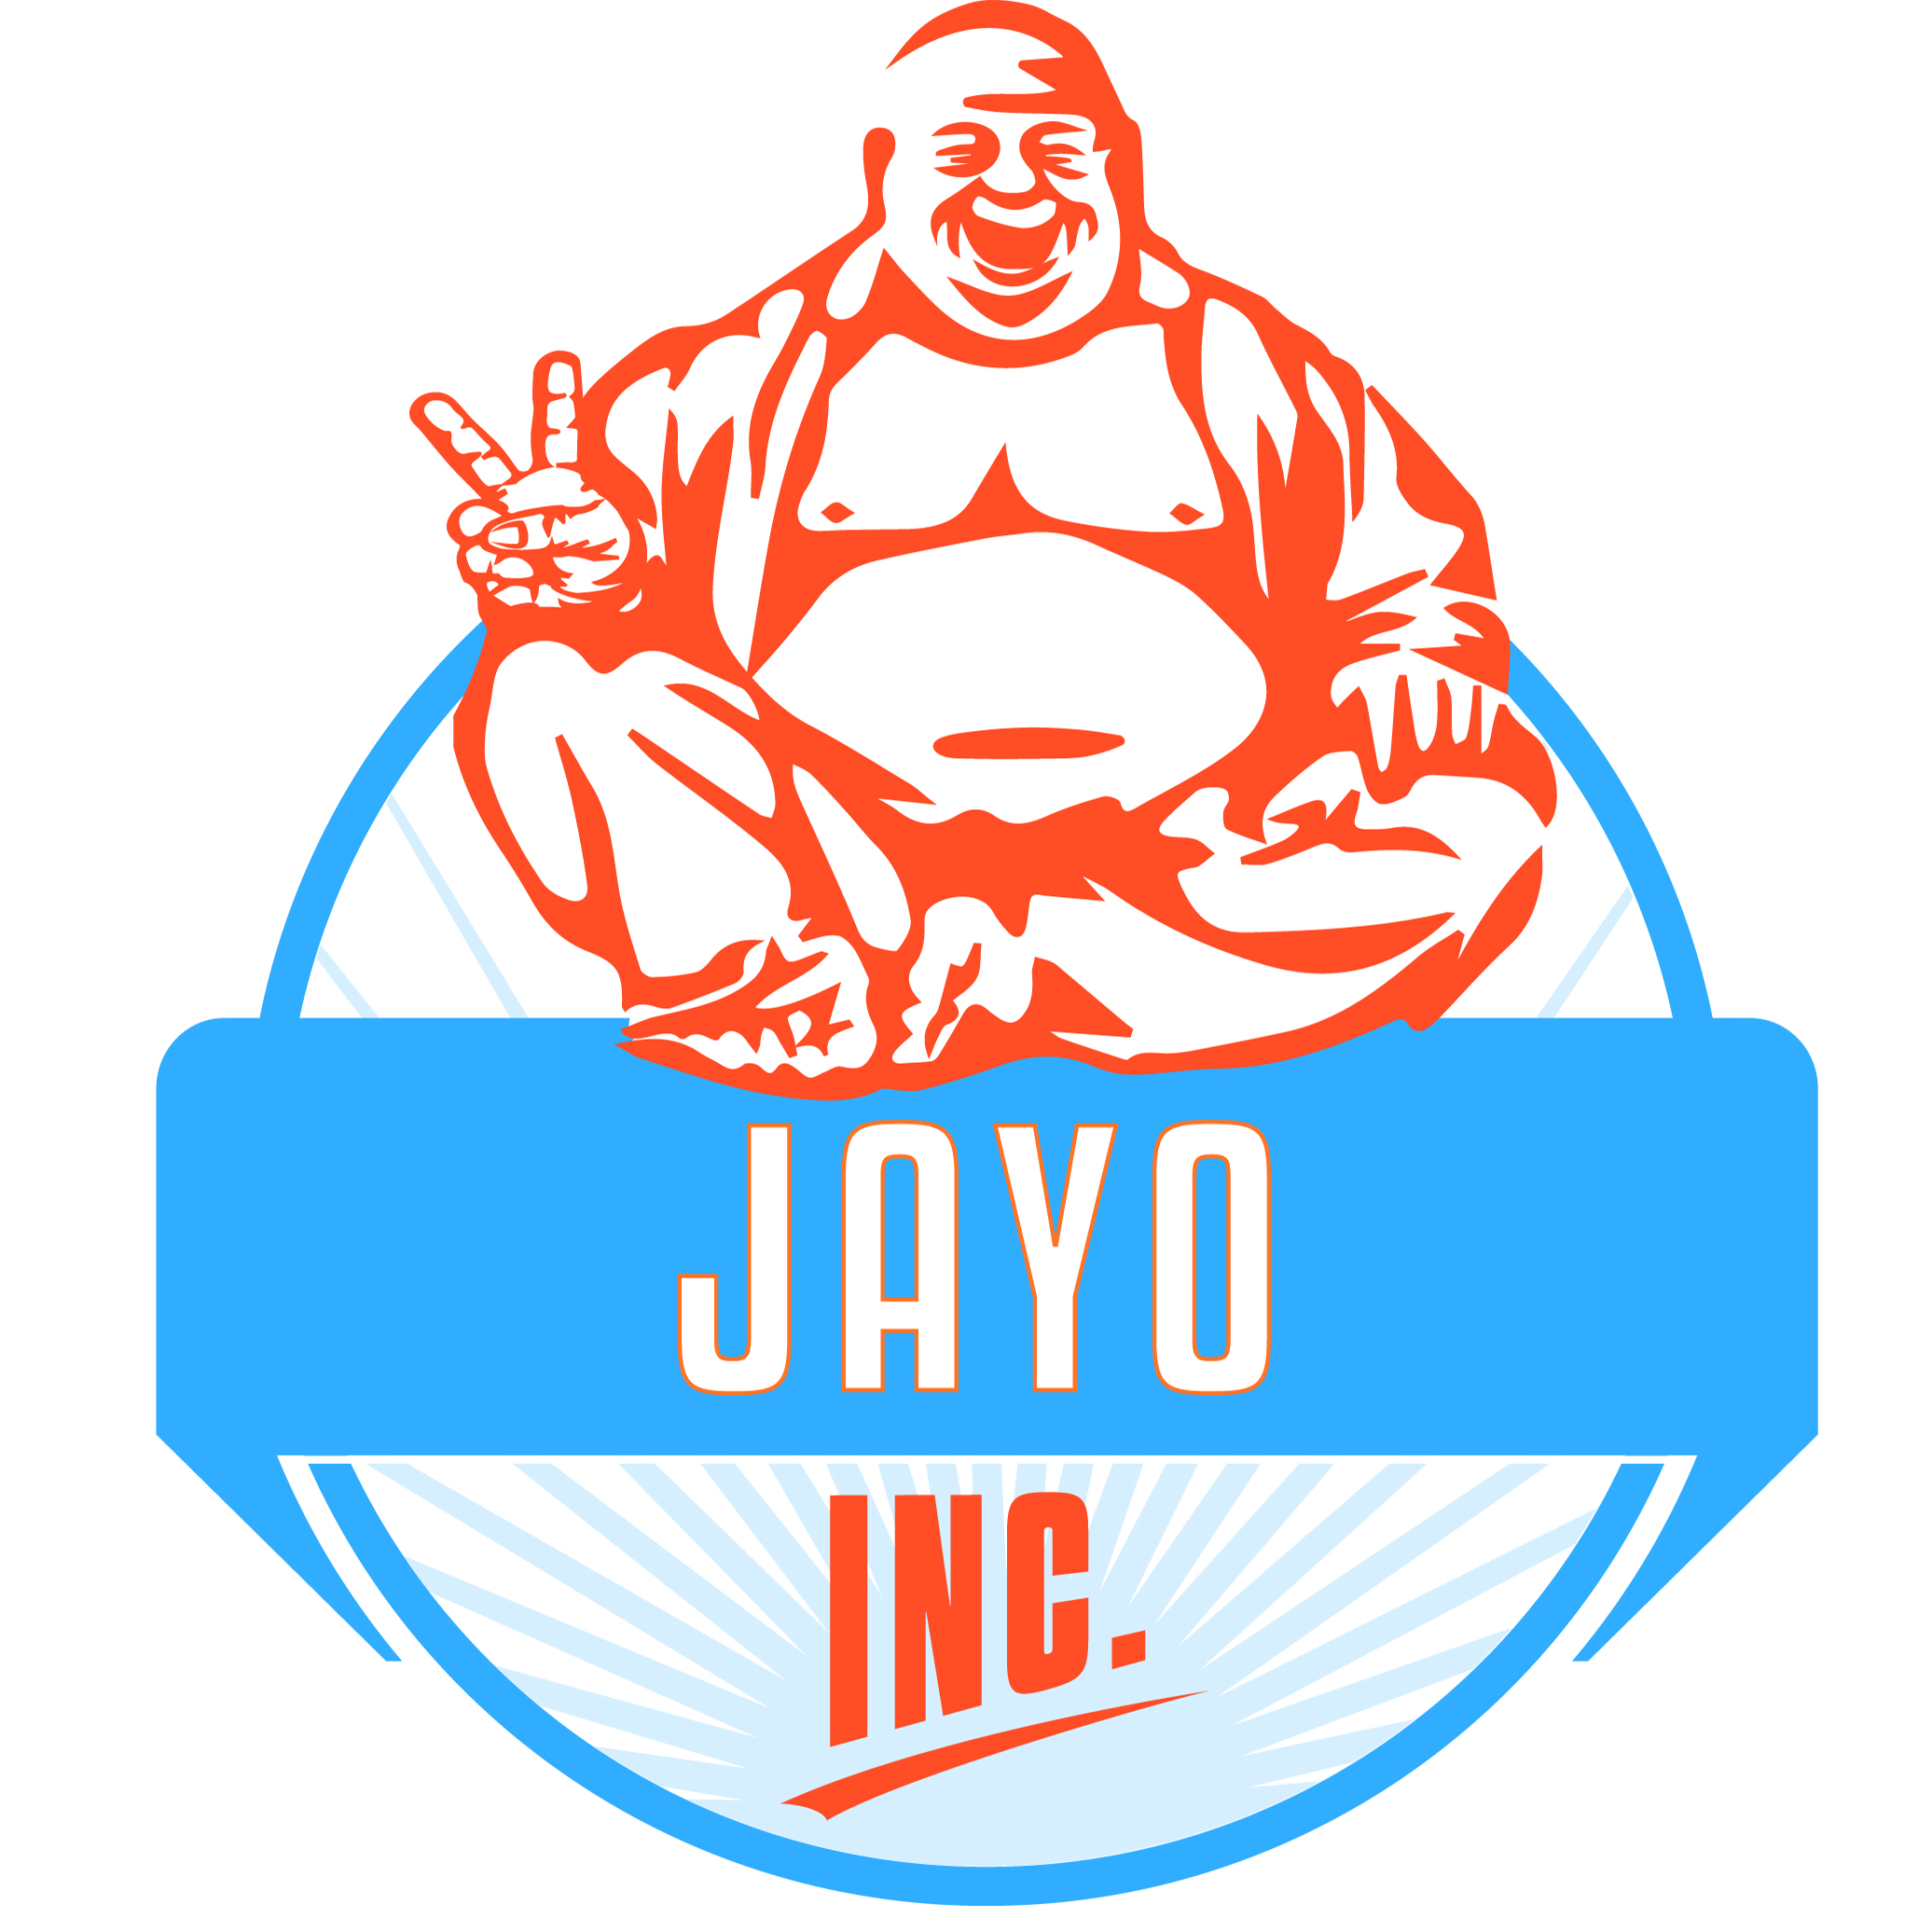 Jayo Inc.